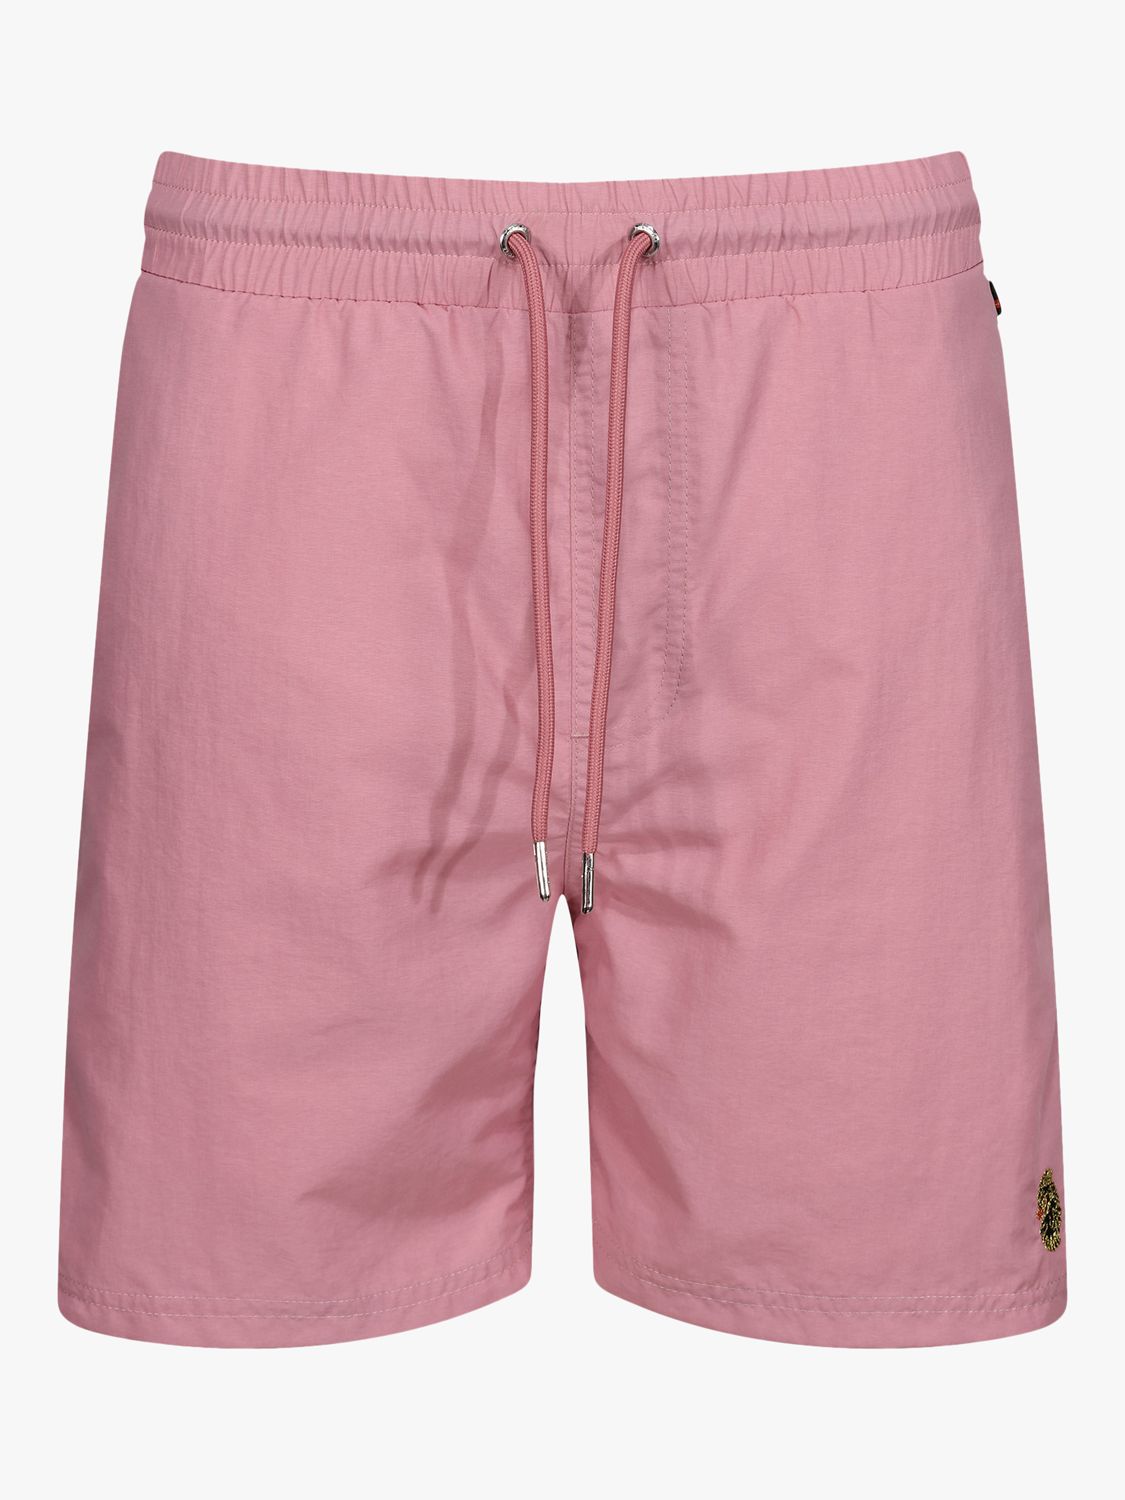 LUKE 1977 Great Swim Shorts, Vintage Pink, XXXL